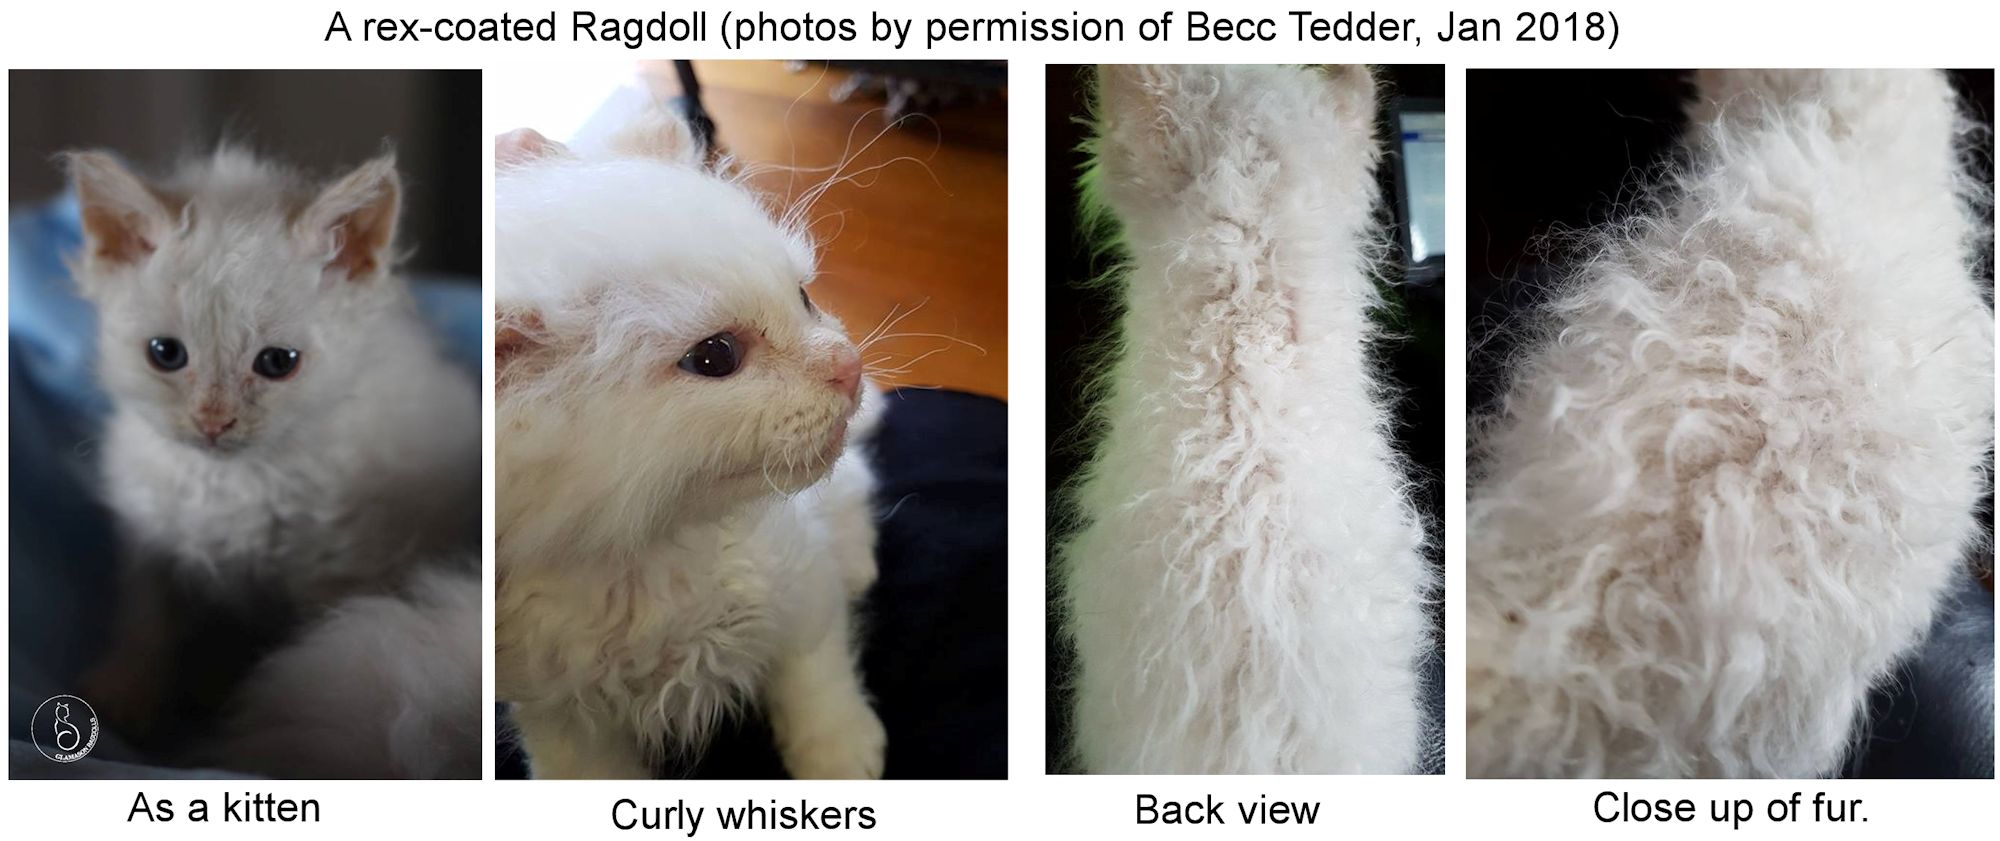 rex coated Ragdoll cat